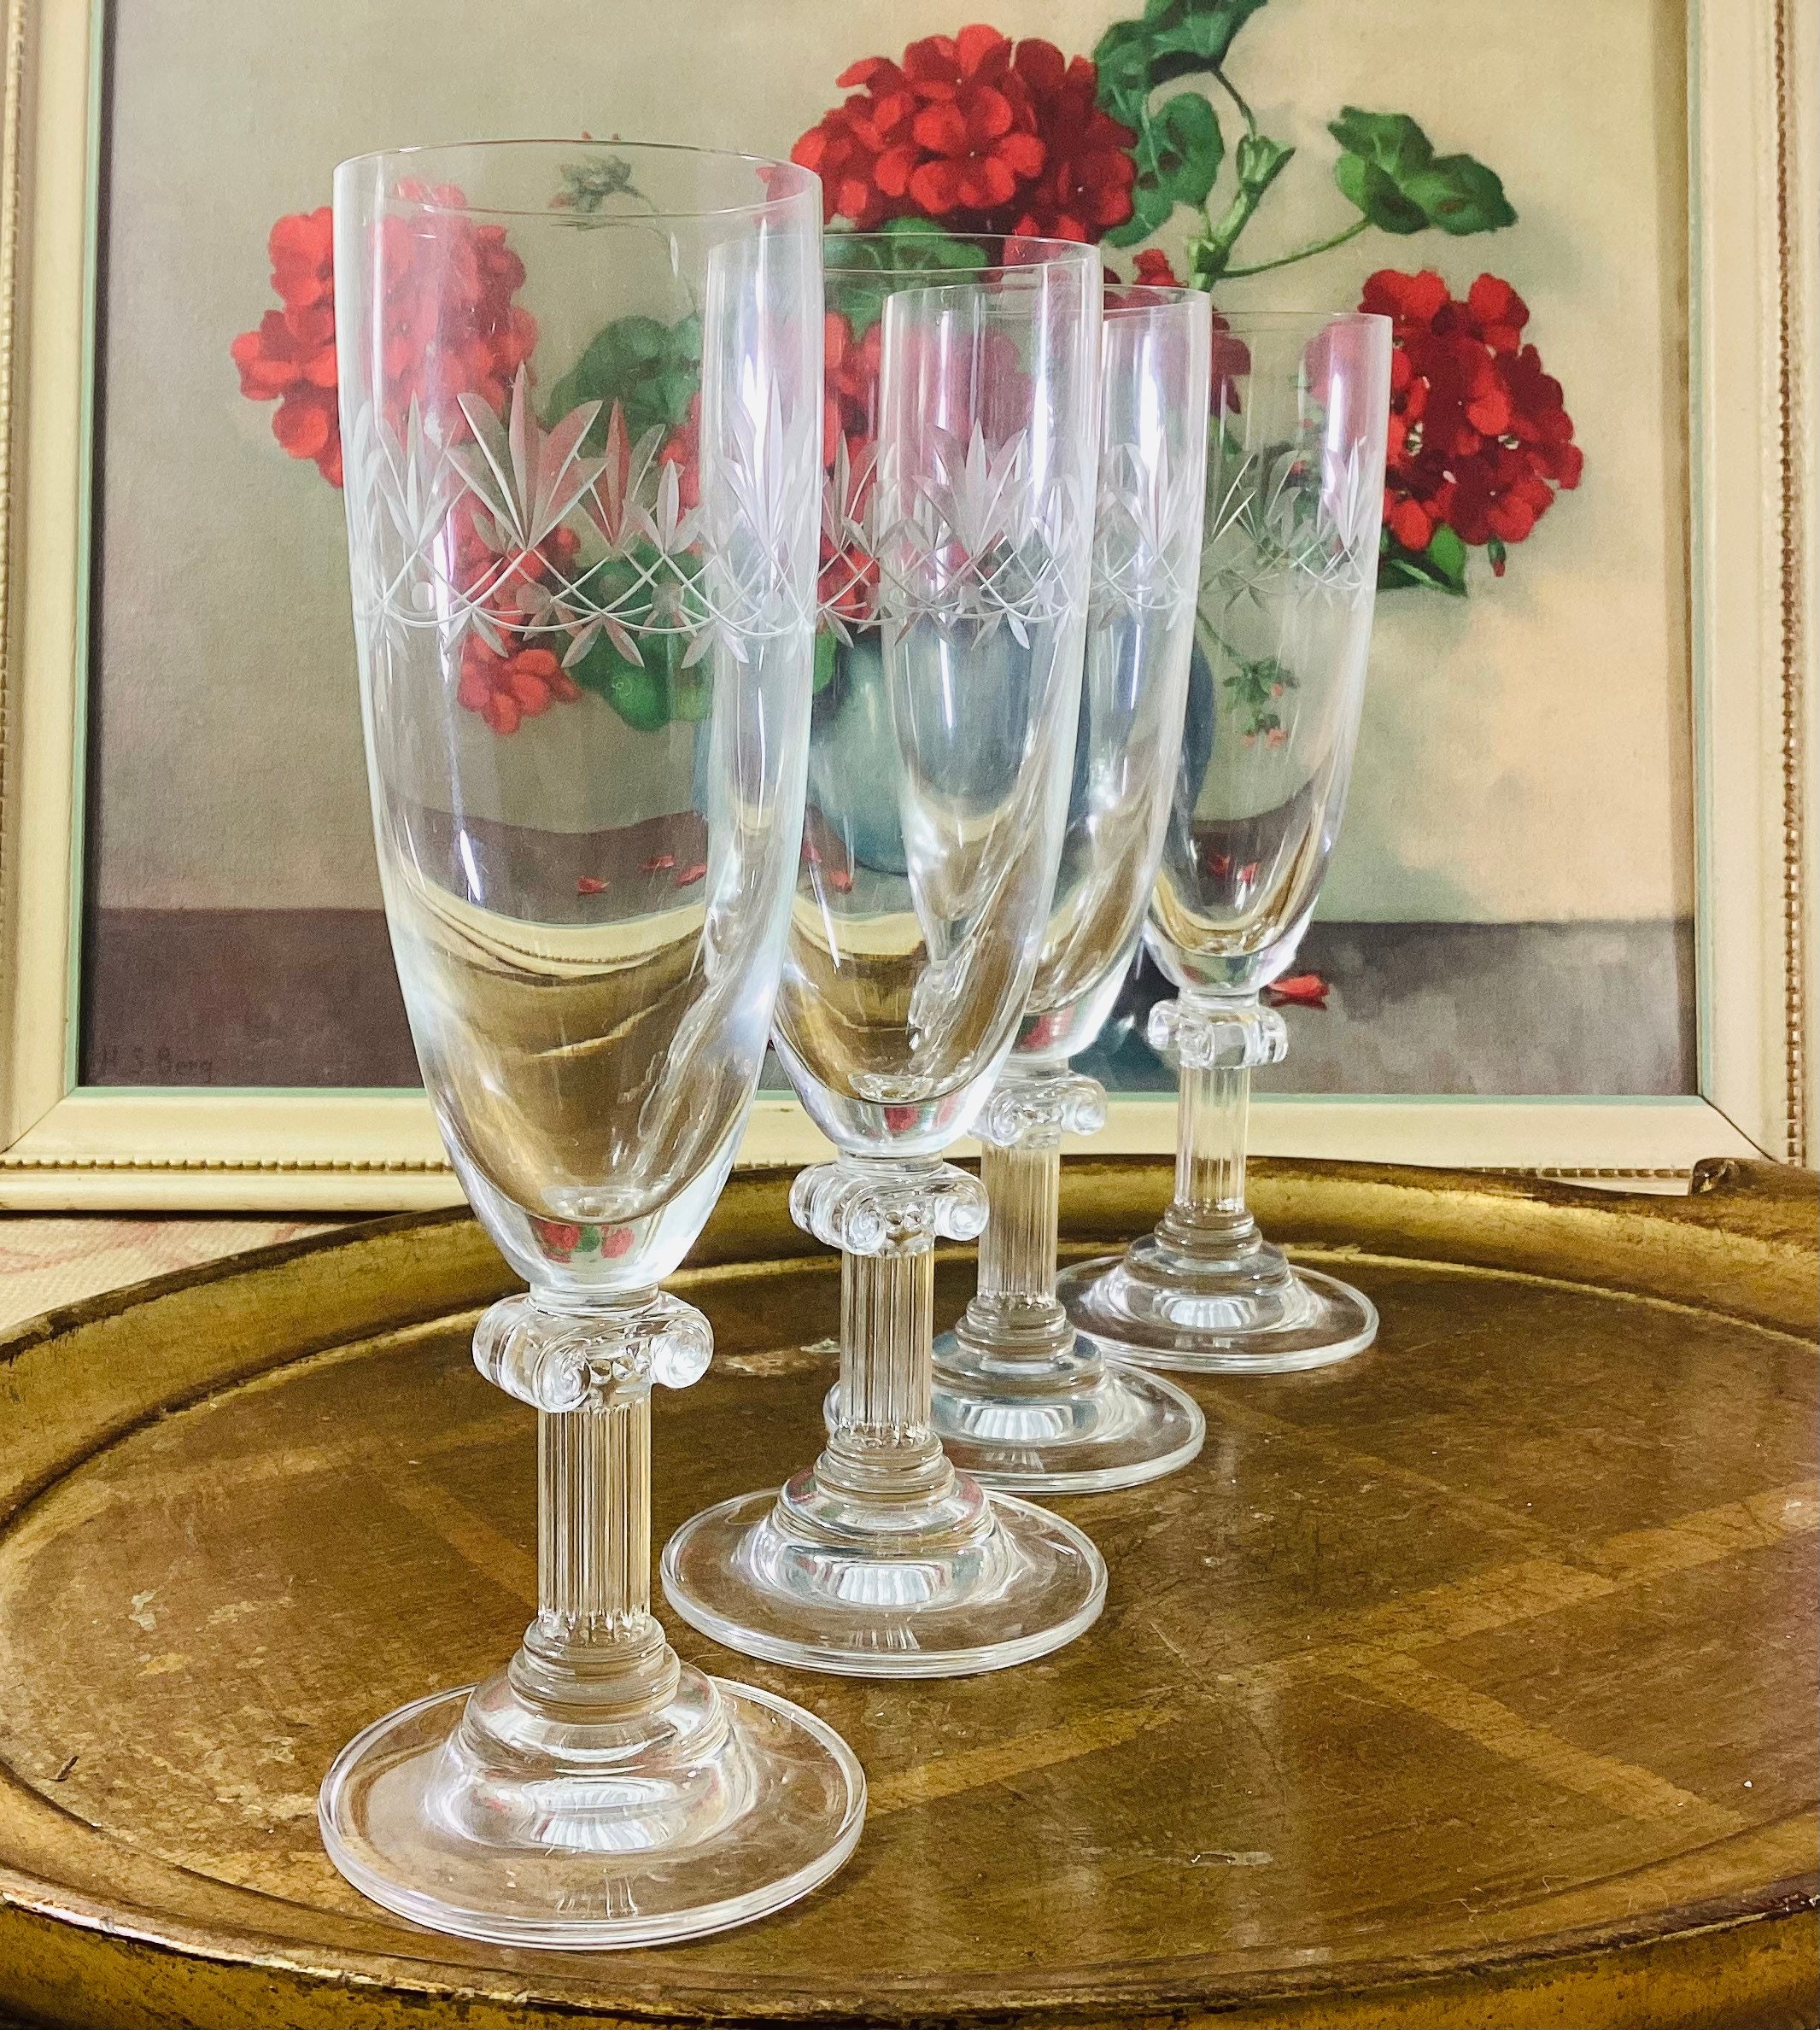 Champagne Flutes / Mikasa Panache Clear / Vintage Champagne Flute / Mikasa  Panache Blown Glass / Vintage Mikasa Wedding Glasses / Drinkware 